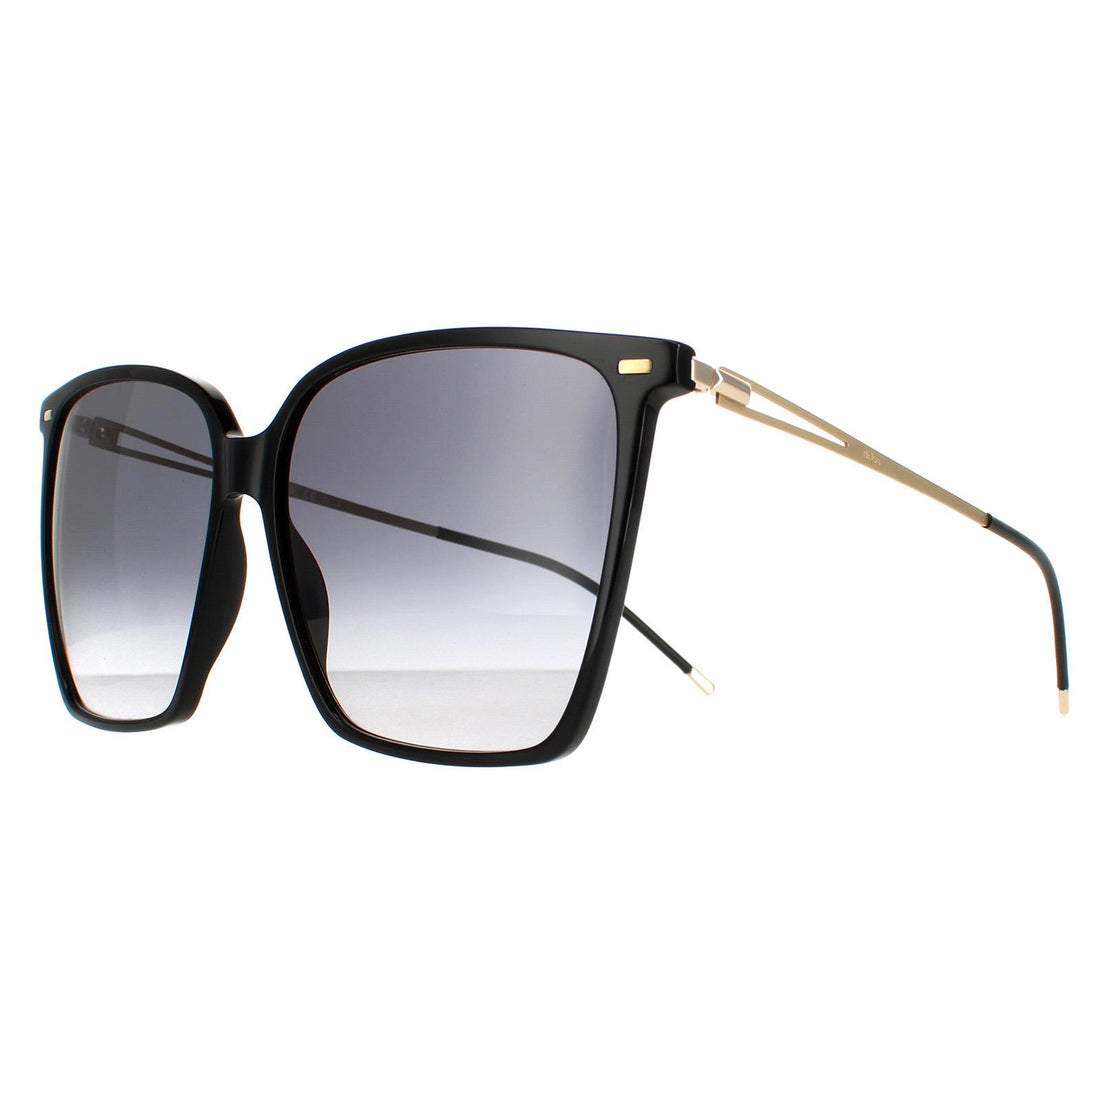 Hugo Boss Sunglasses BOSS 1388/S 807 9O Black Dark Grey Gradient